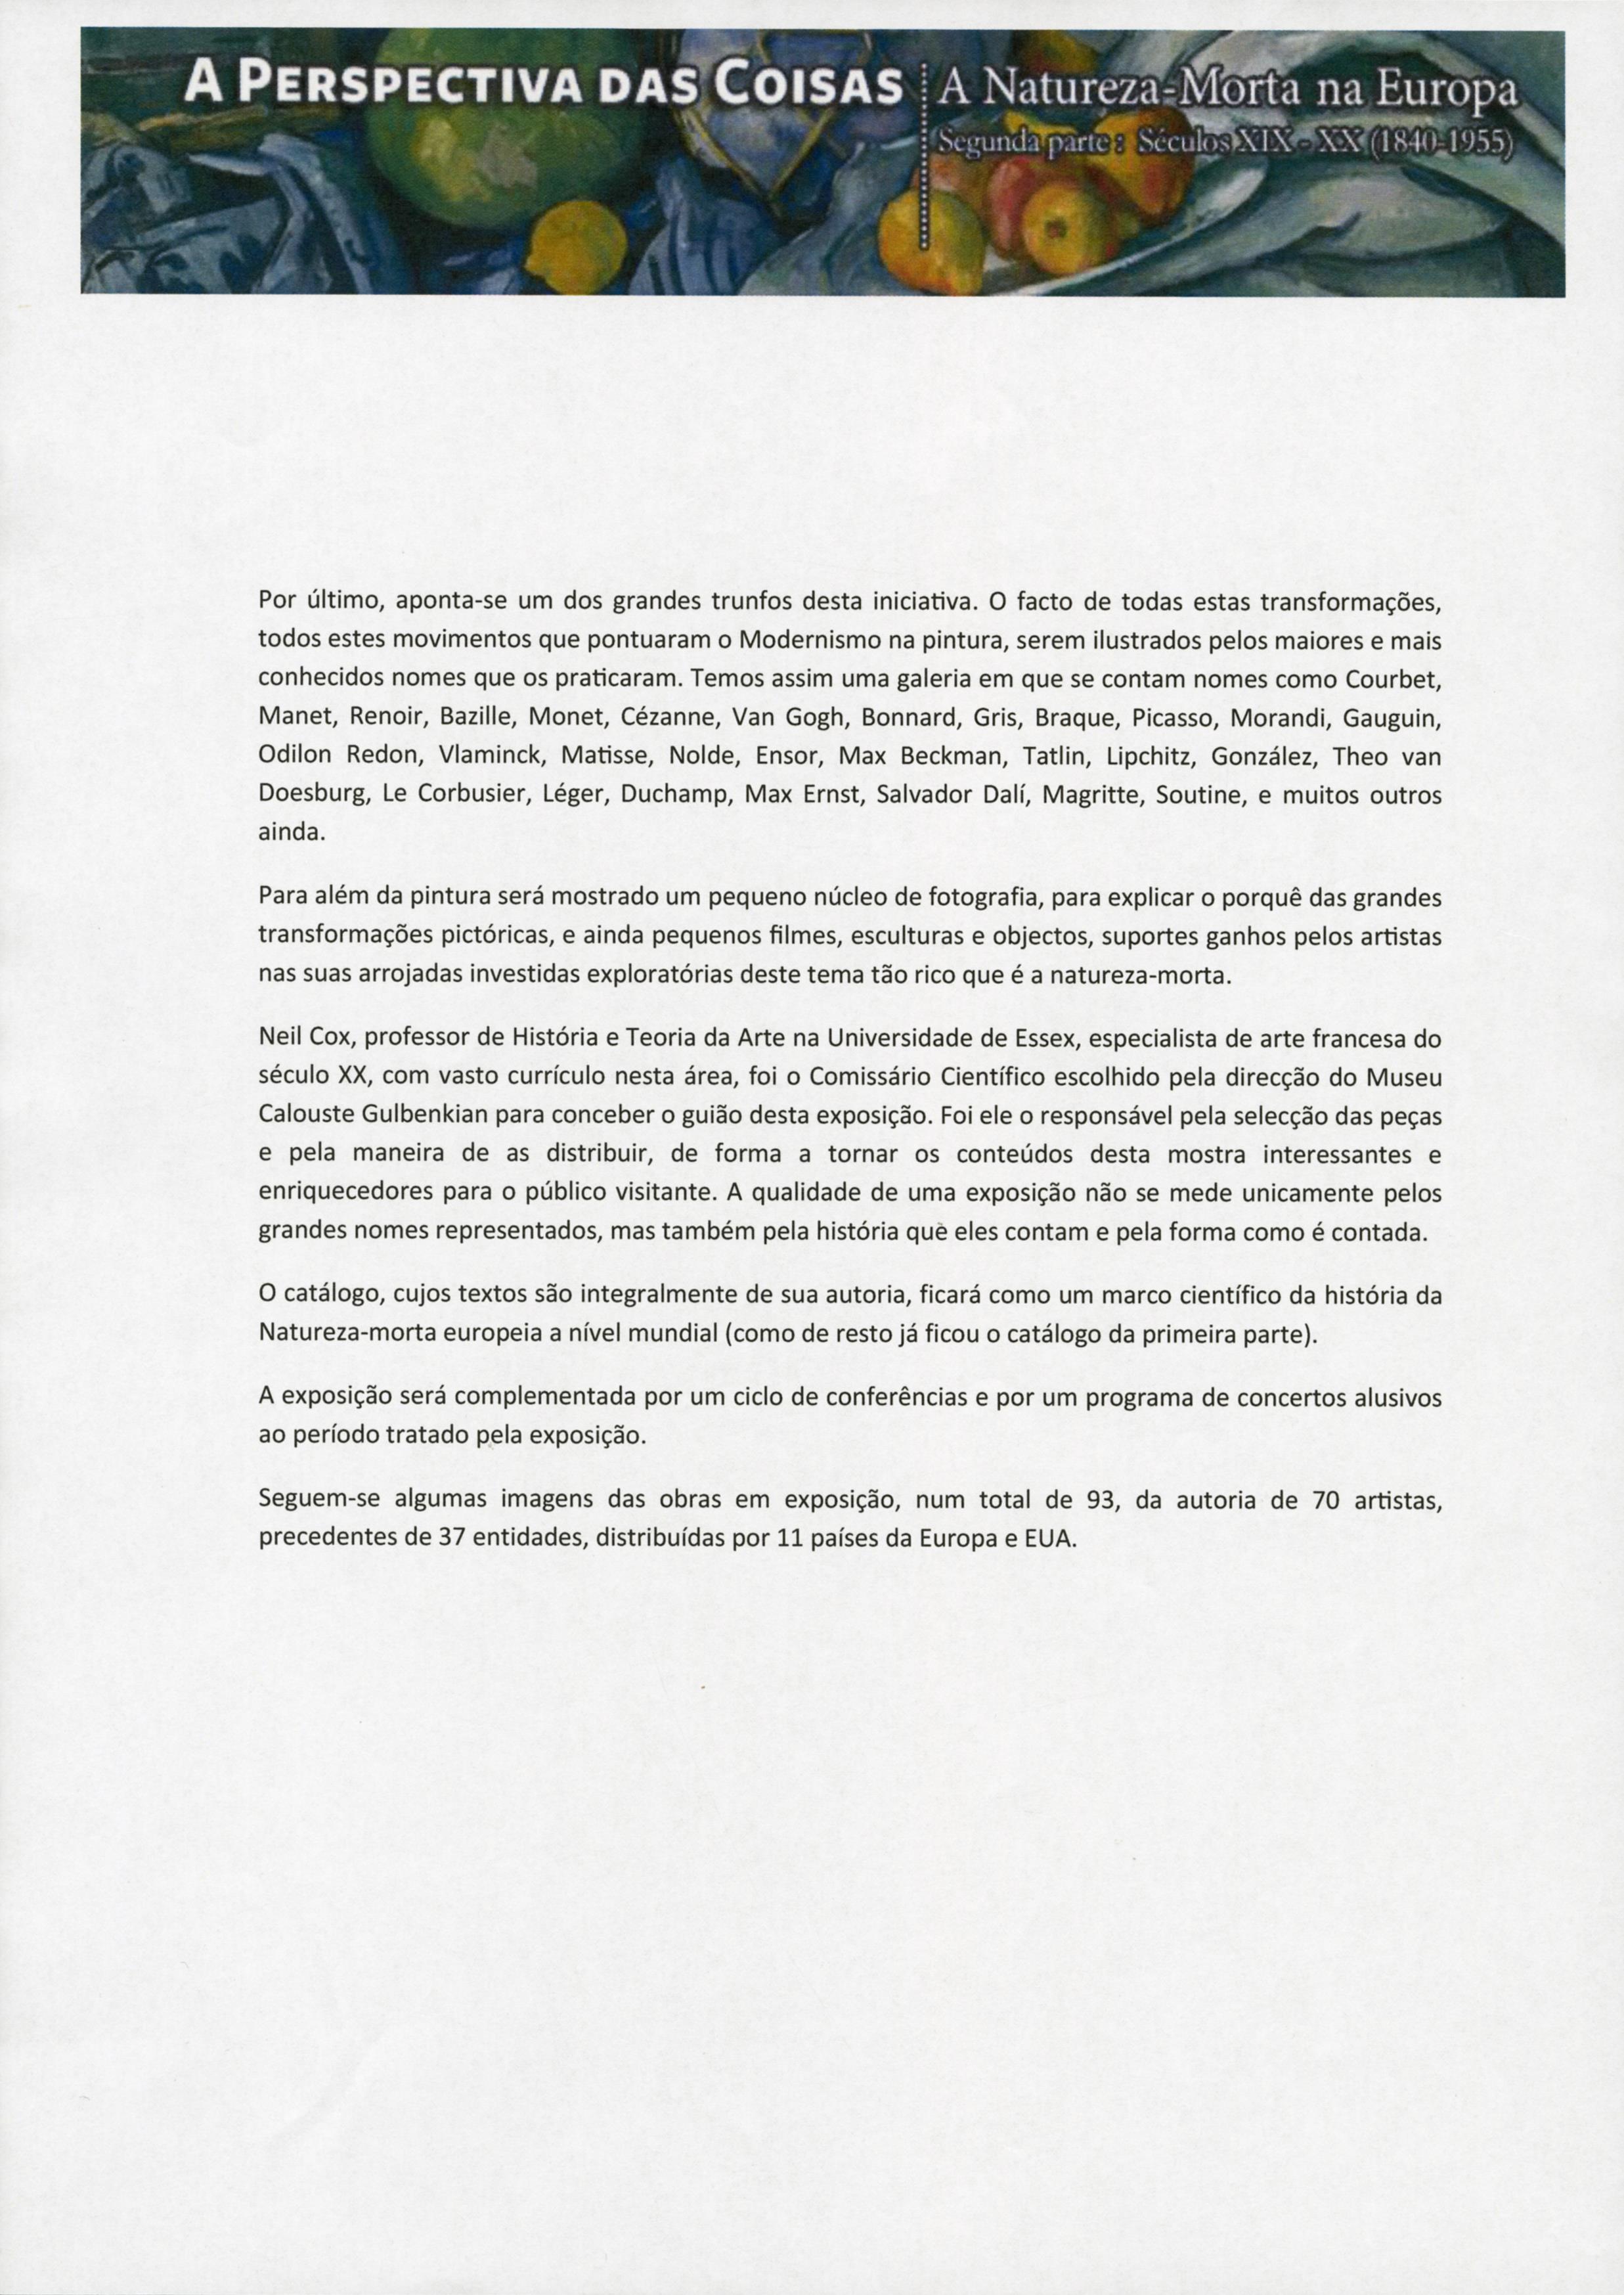 Museu Calouste Gulbenkian / Fundação Calouste Gulbenkian